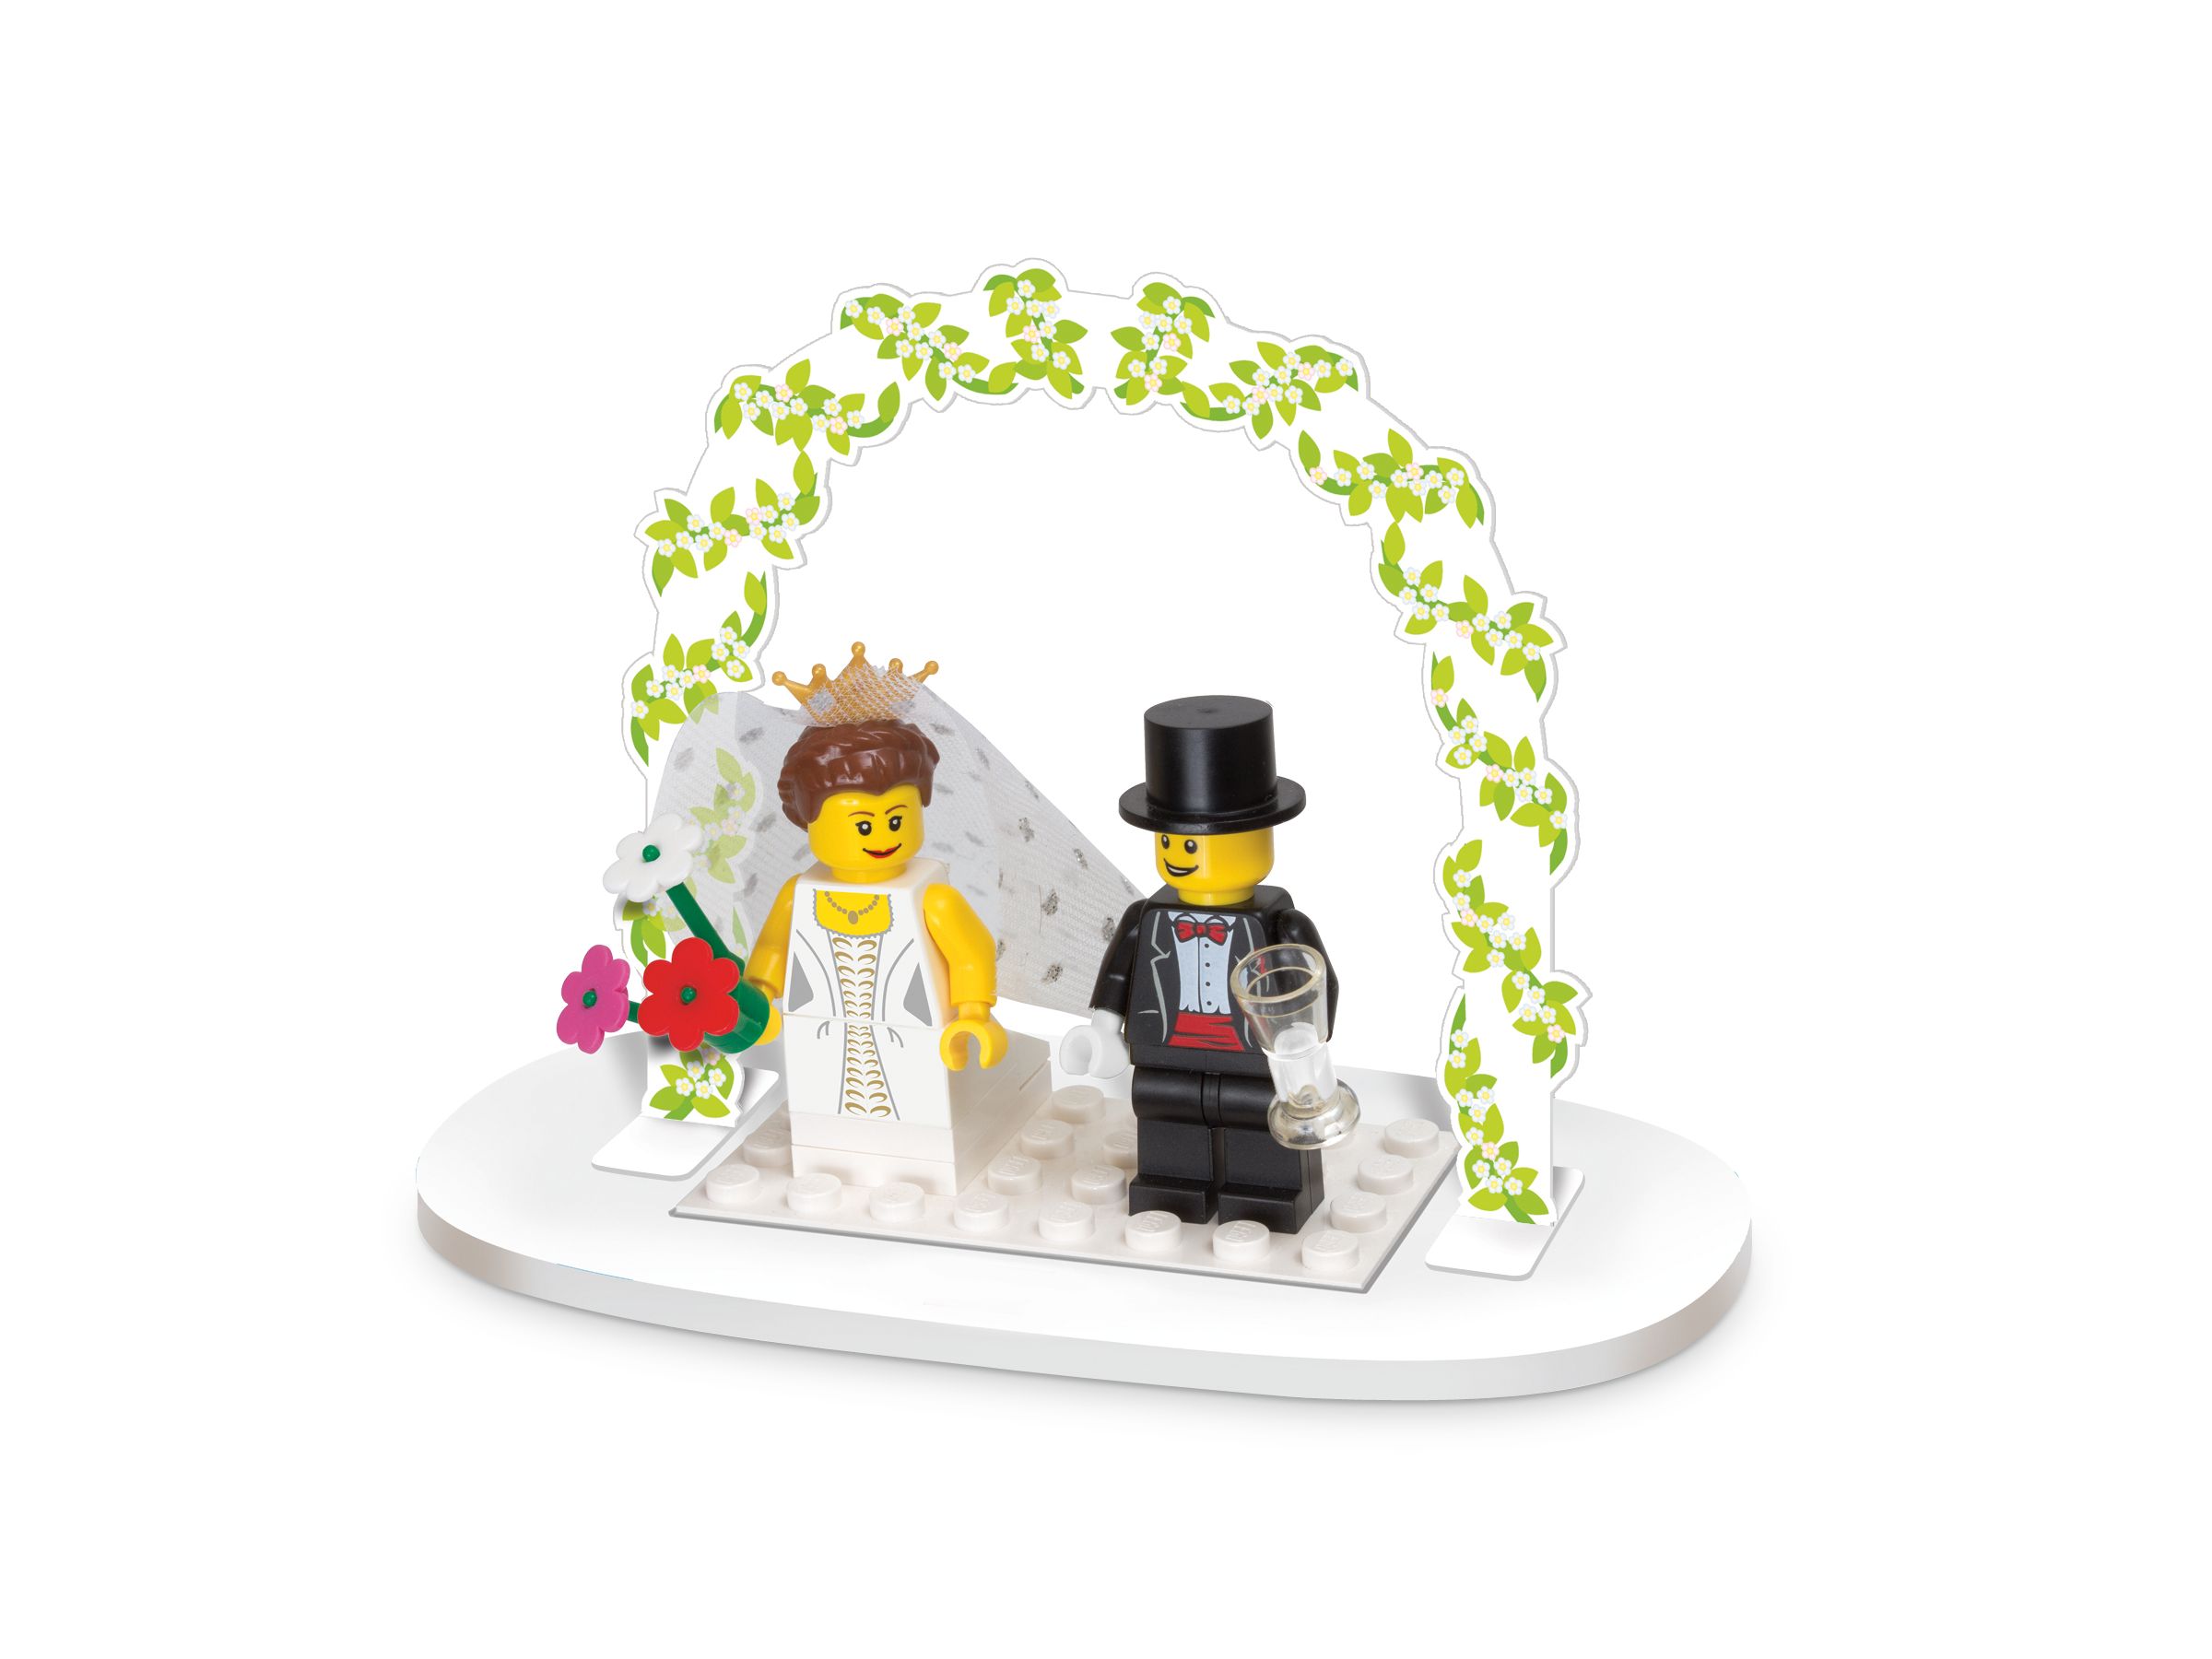 Lego couple